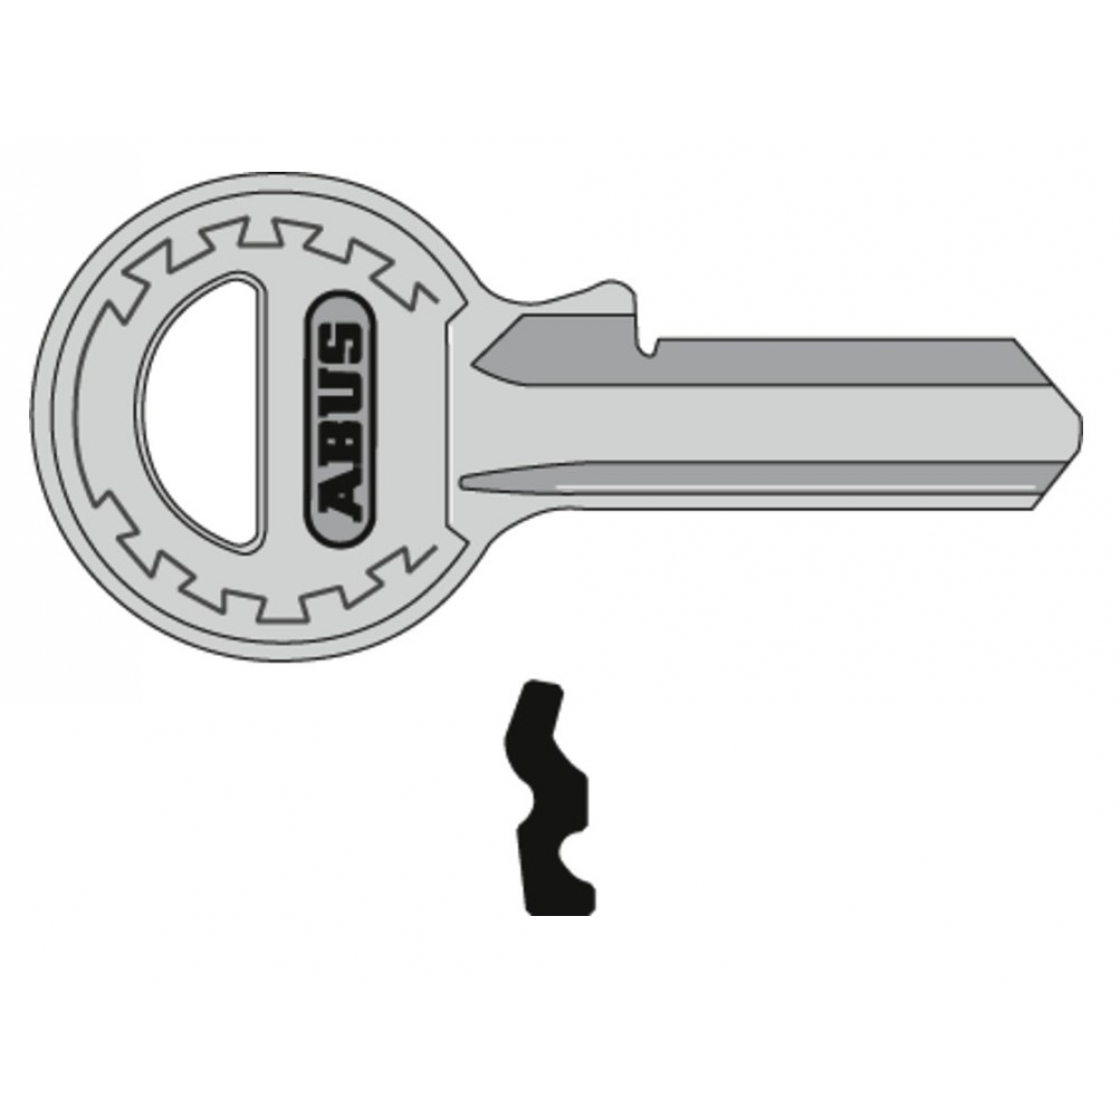 Profile key